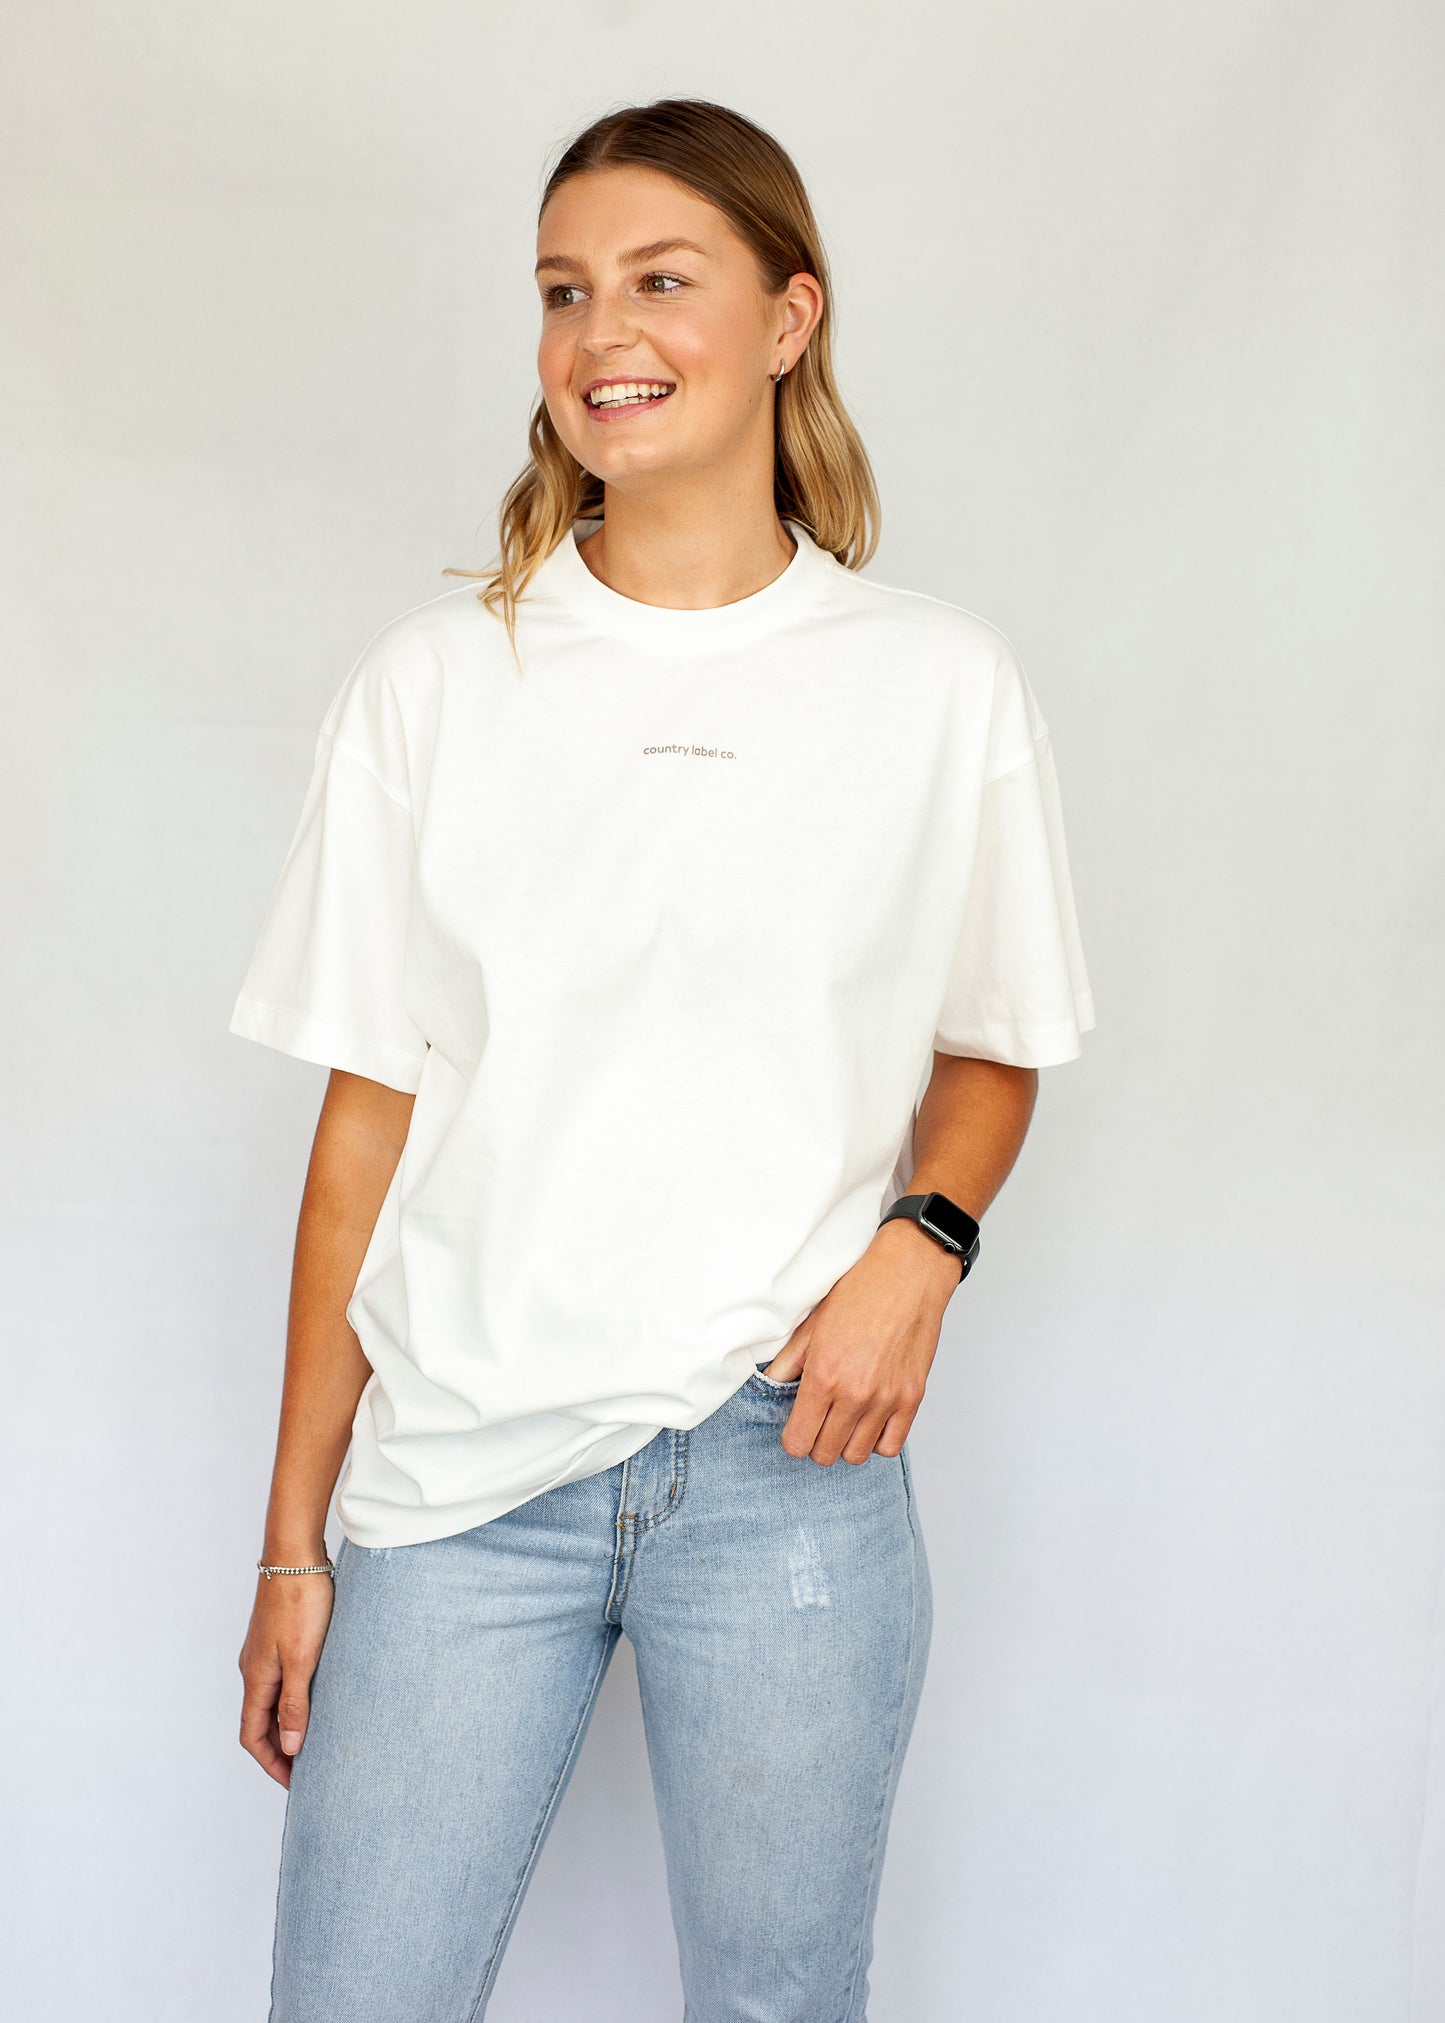 Women's Oversized White T-Shirt